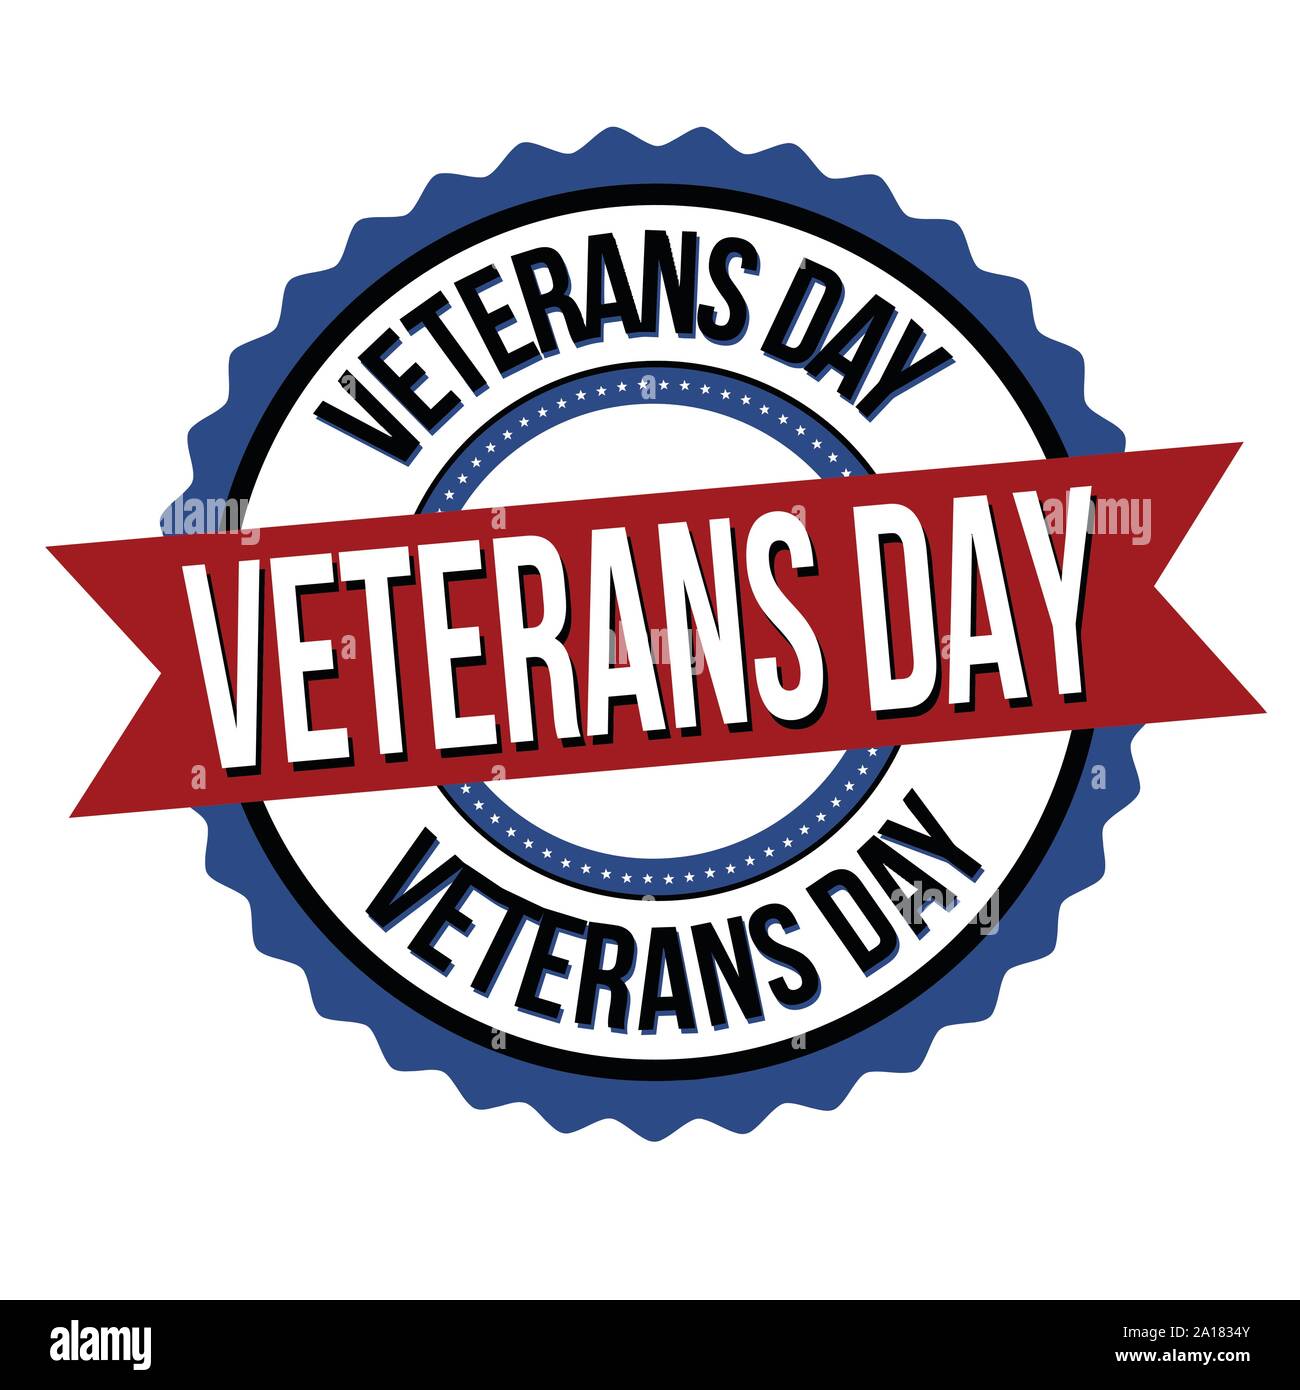 Veterans day label or sticker on white background, vector illustration Stock Vector